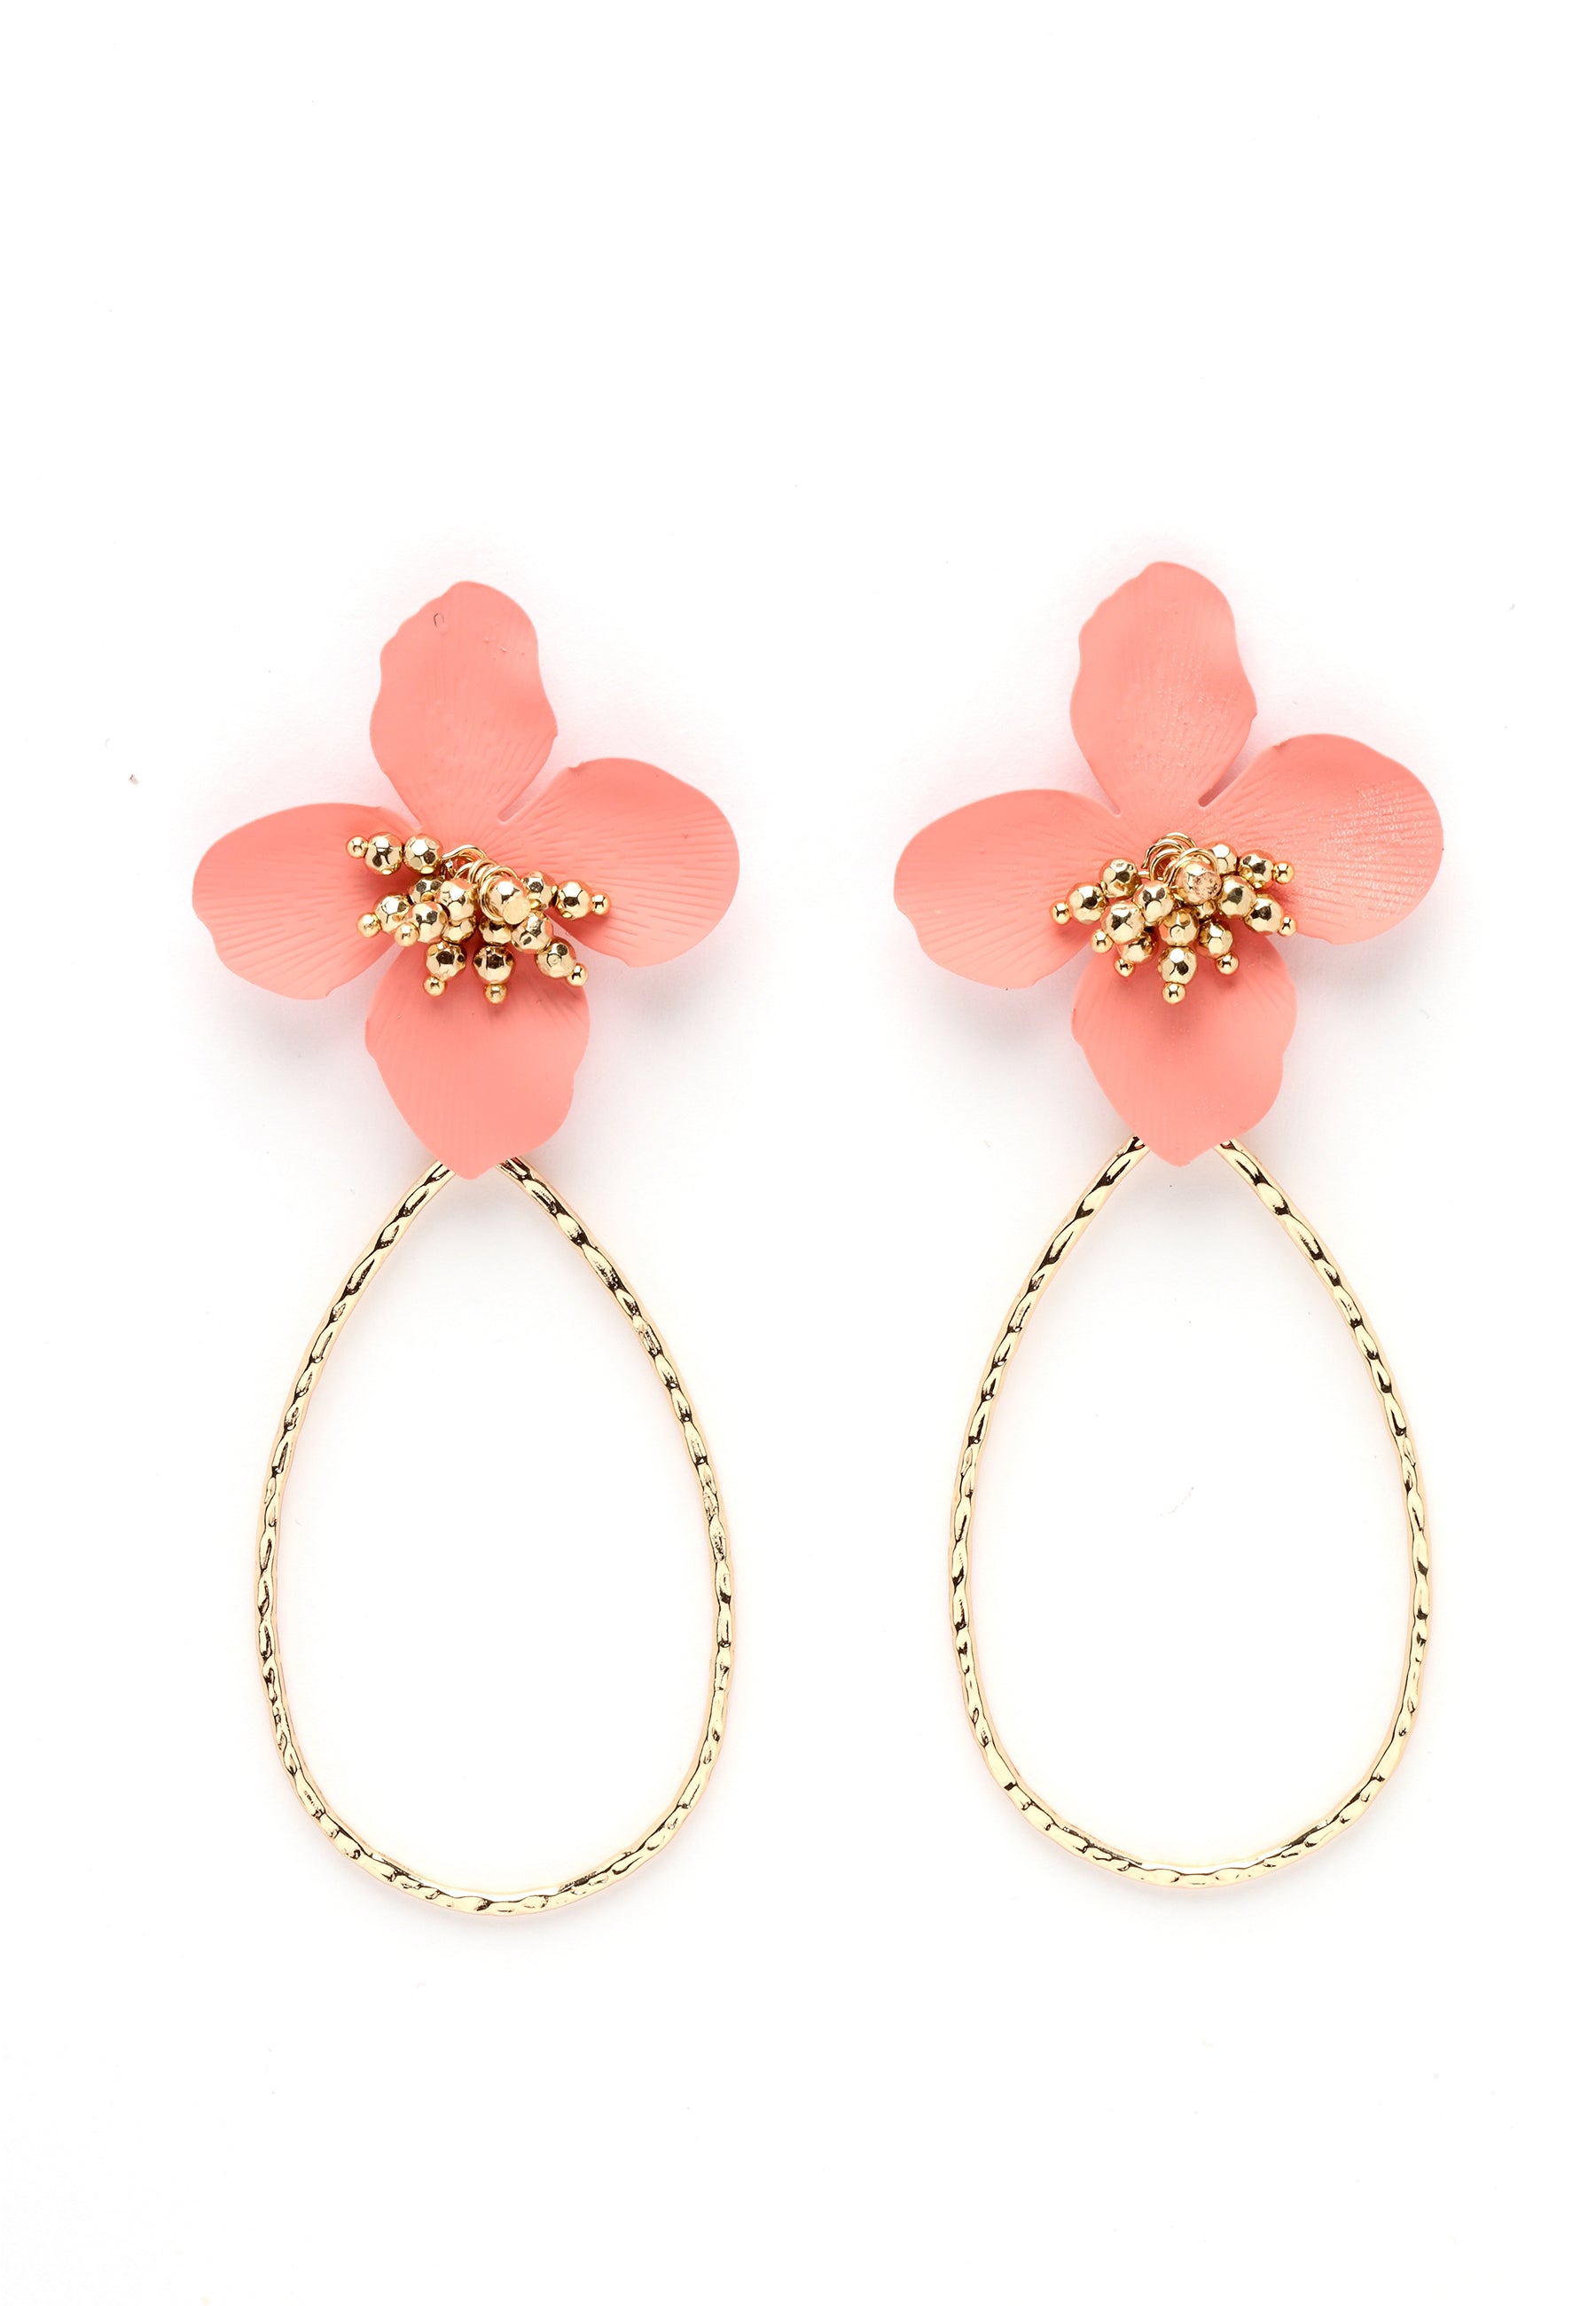 Plum Blossom Earrings in peach